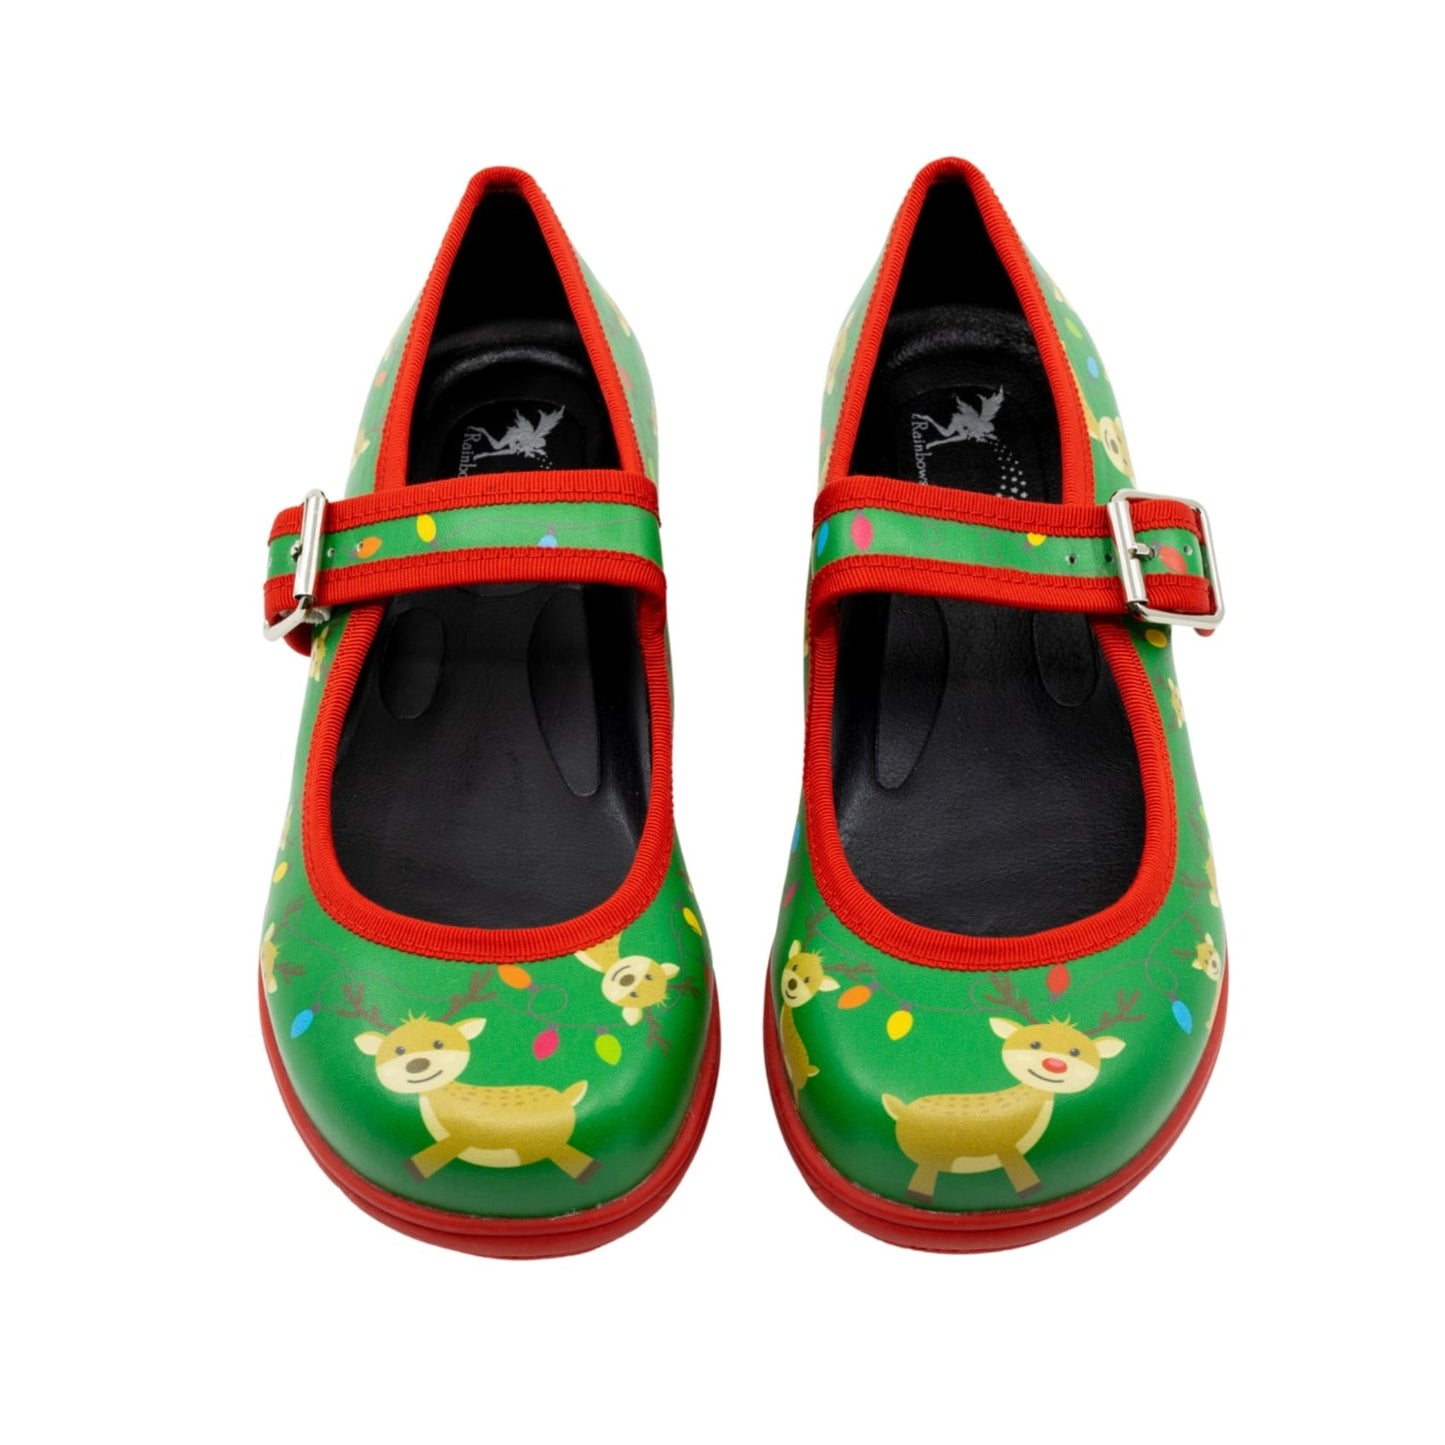 Santa's Helper Mary Janes by RainbowsAndFairies.com.au (Reindeer - Christmas Shoes - Merry Christmas - Buckle Up Shoes - Mismatched Shoes - Festive) - SKU: FW_MARYJ_SHELP_ORG - Pic-02